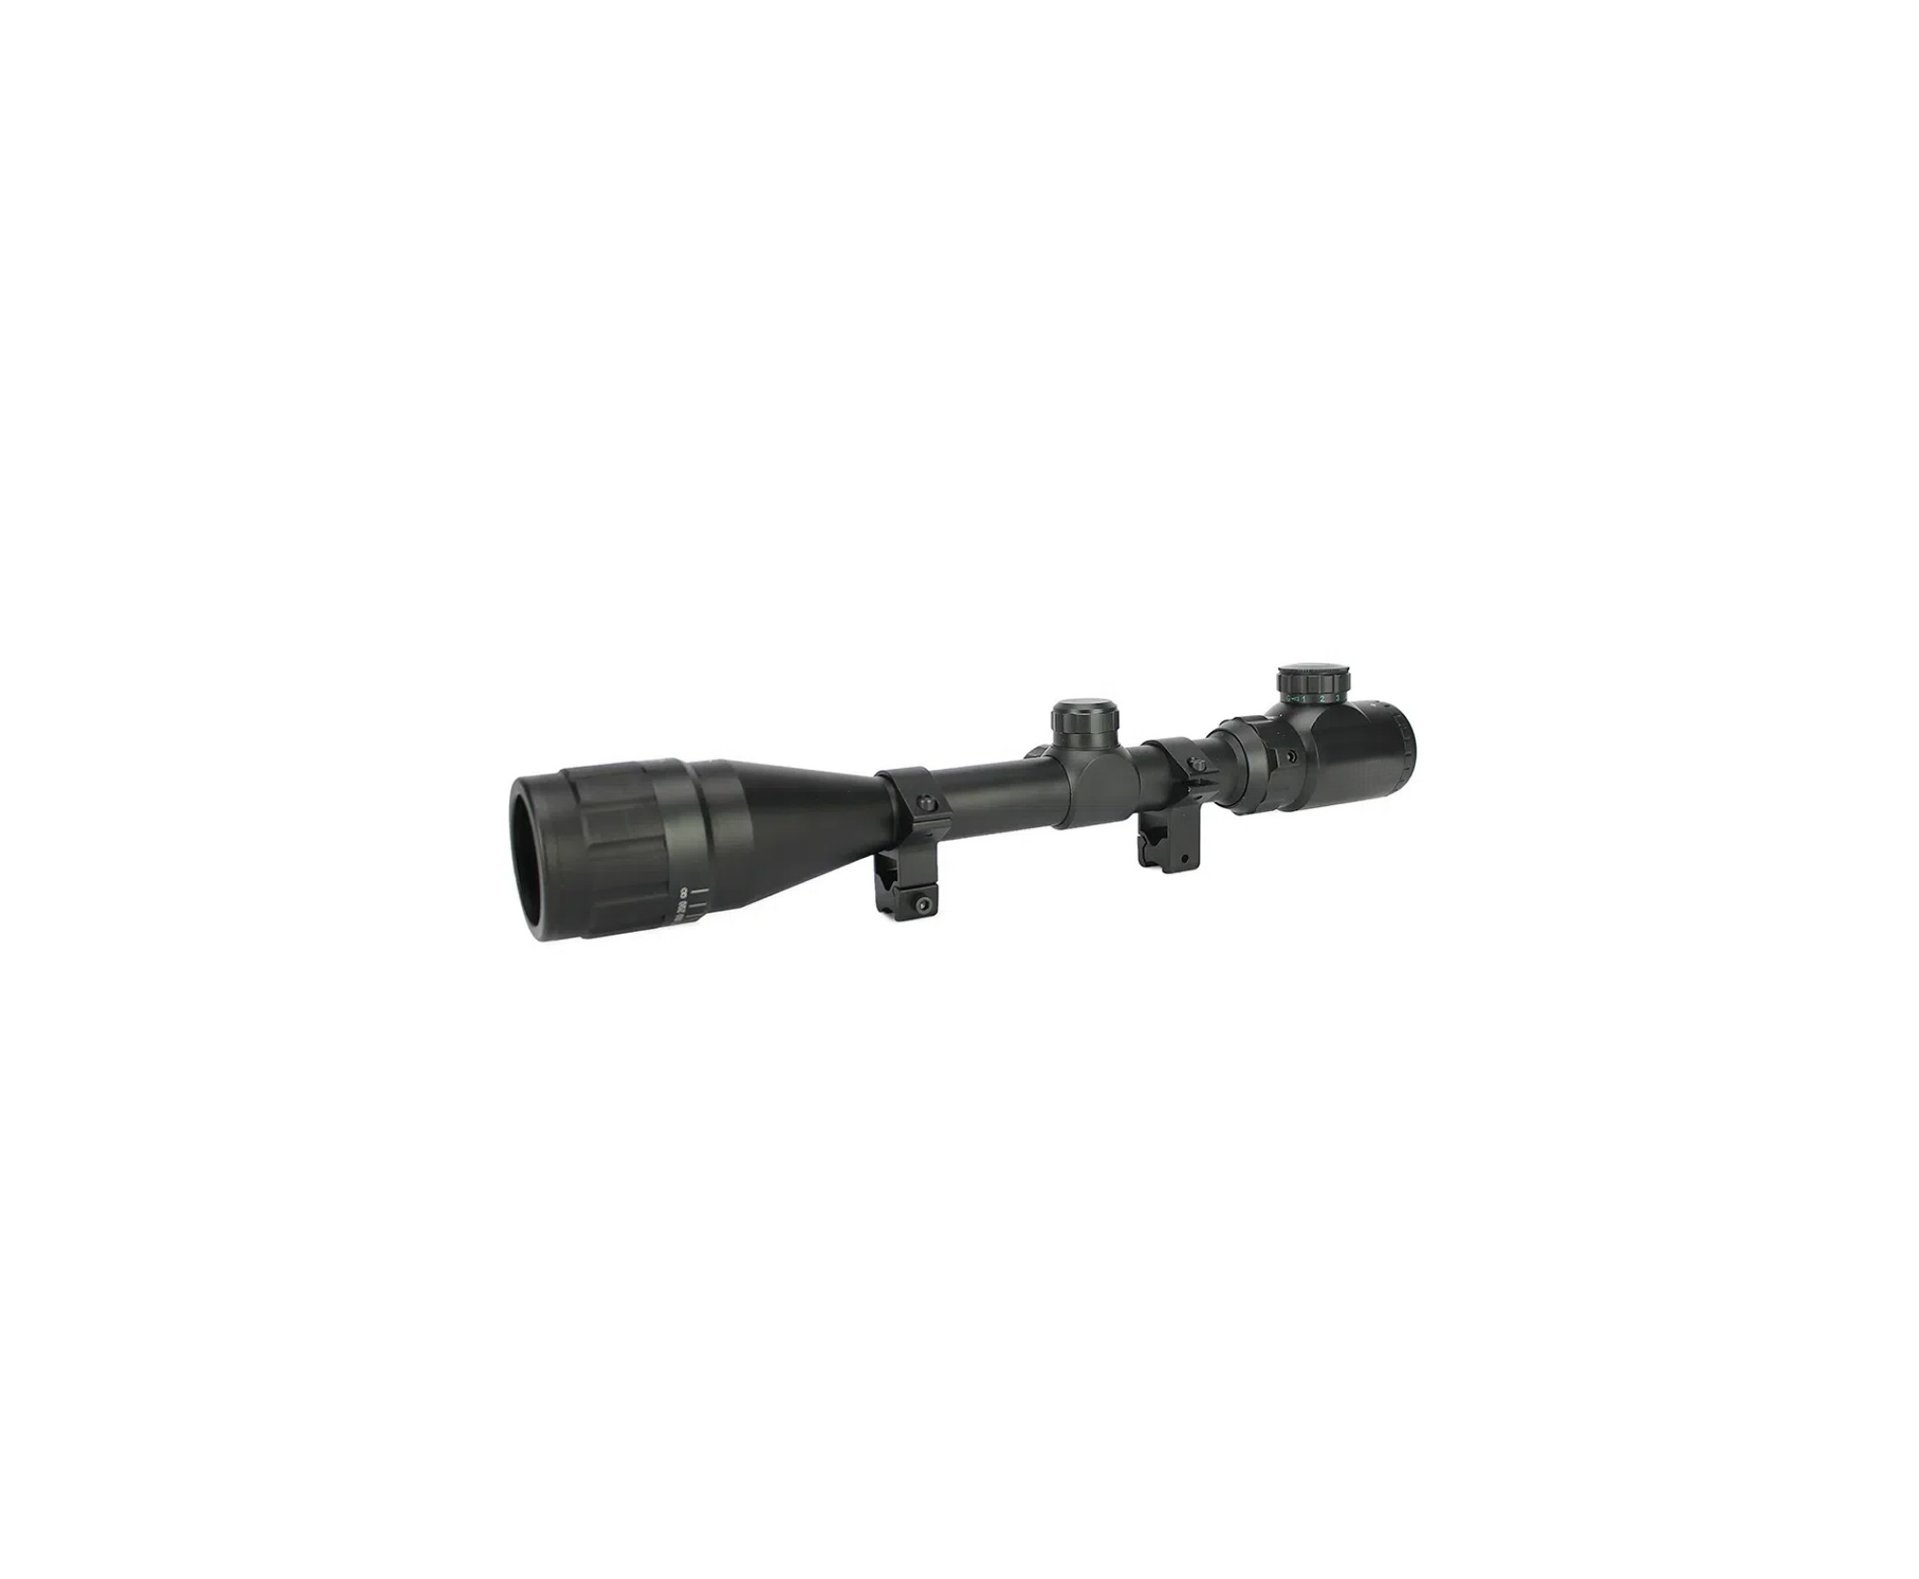 Carabina de Pressão PCP Kral Puncher Nish Sinthetic 5,5mm + Bomba +Luneta 4-16x40